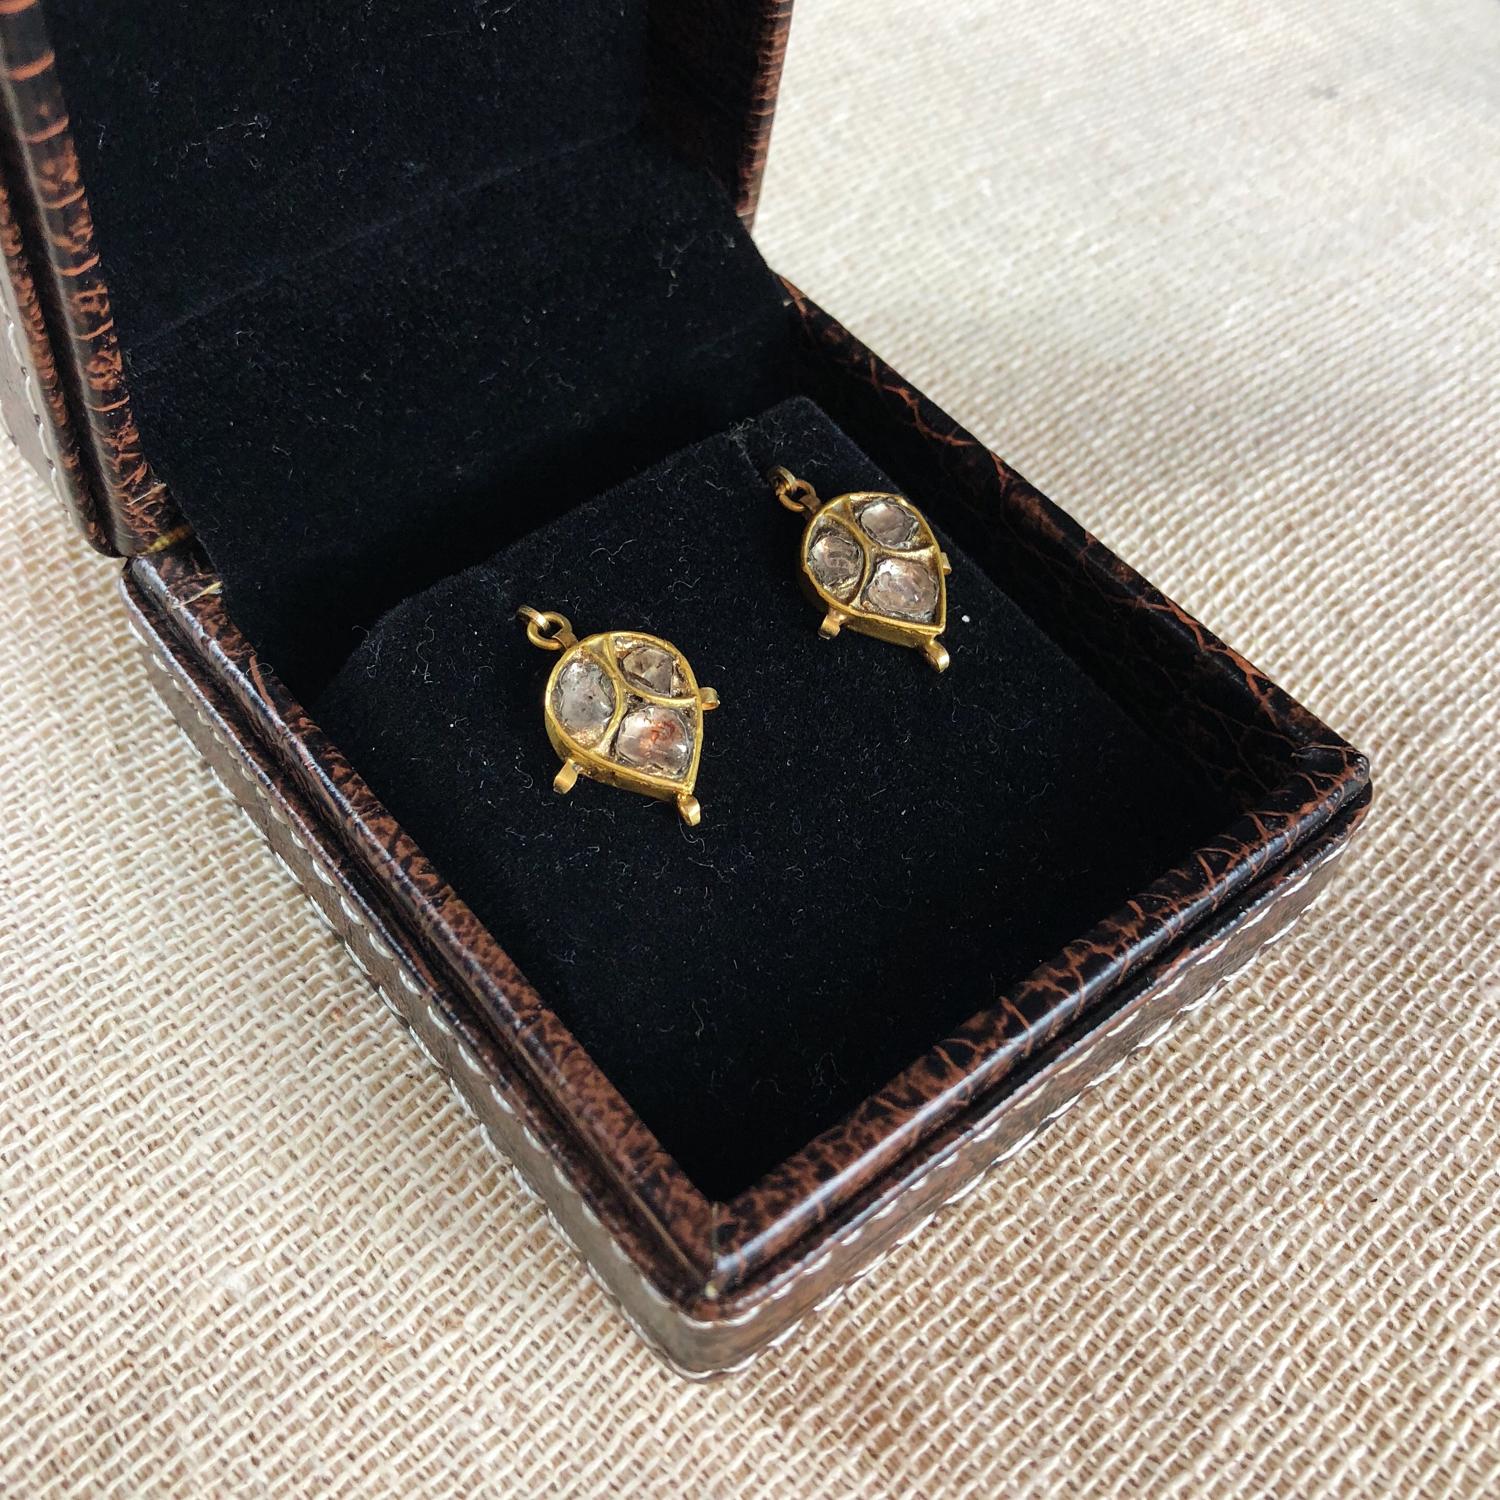 A pair of Polke diamond Indian earrings